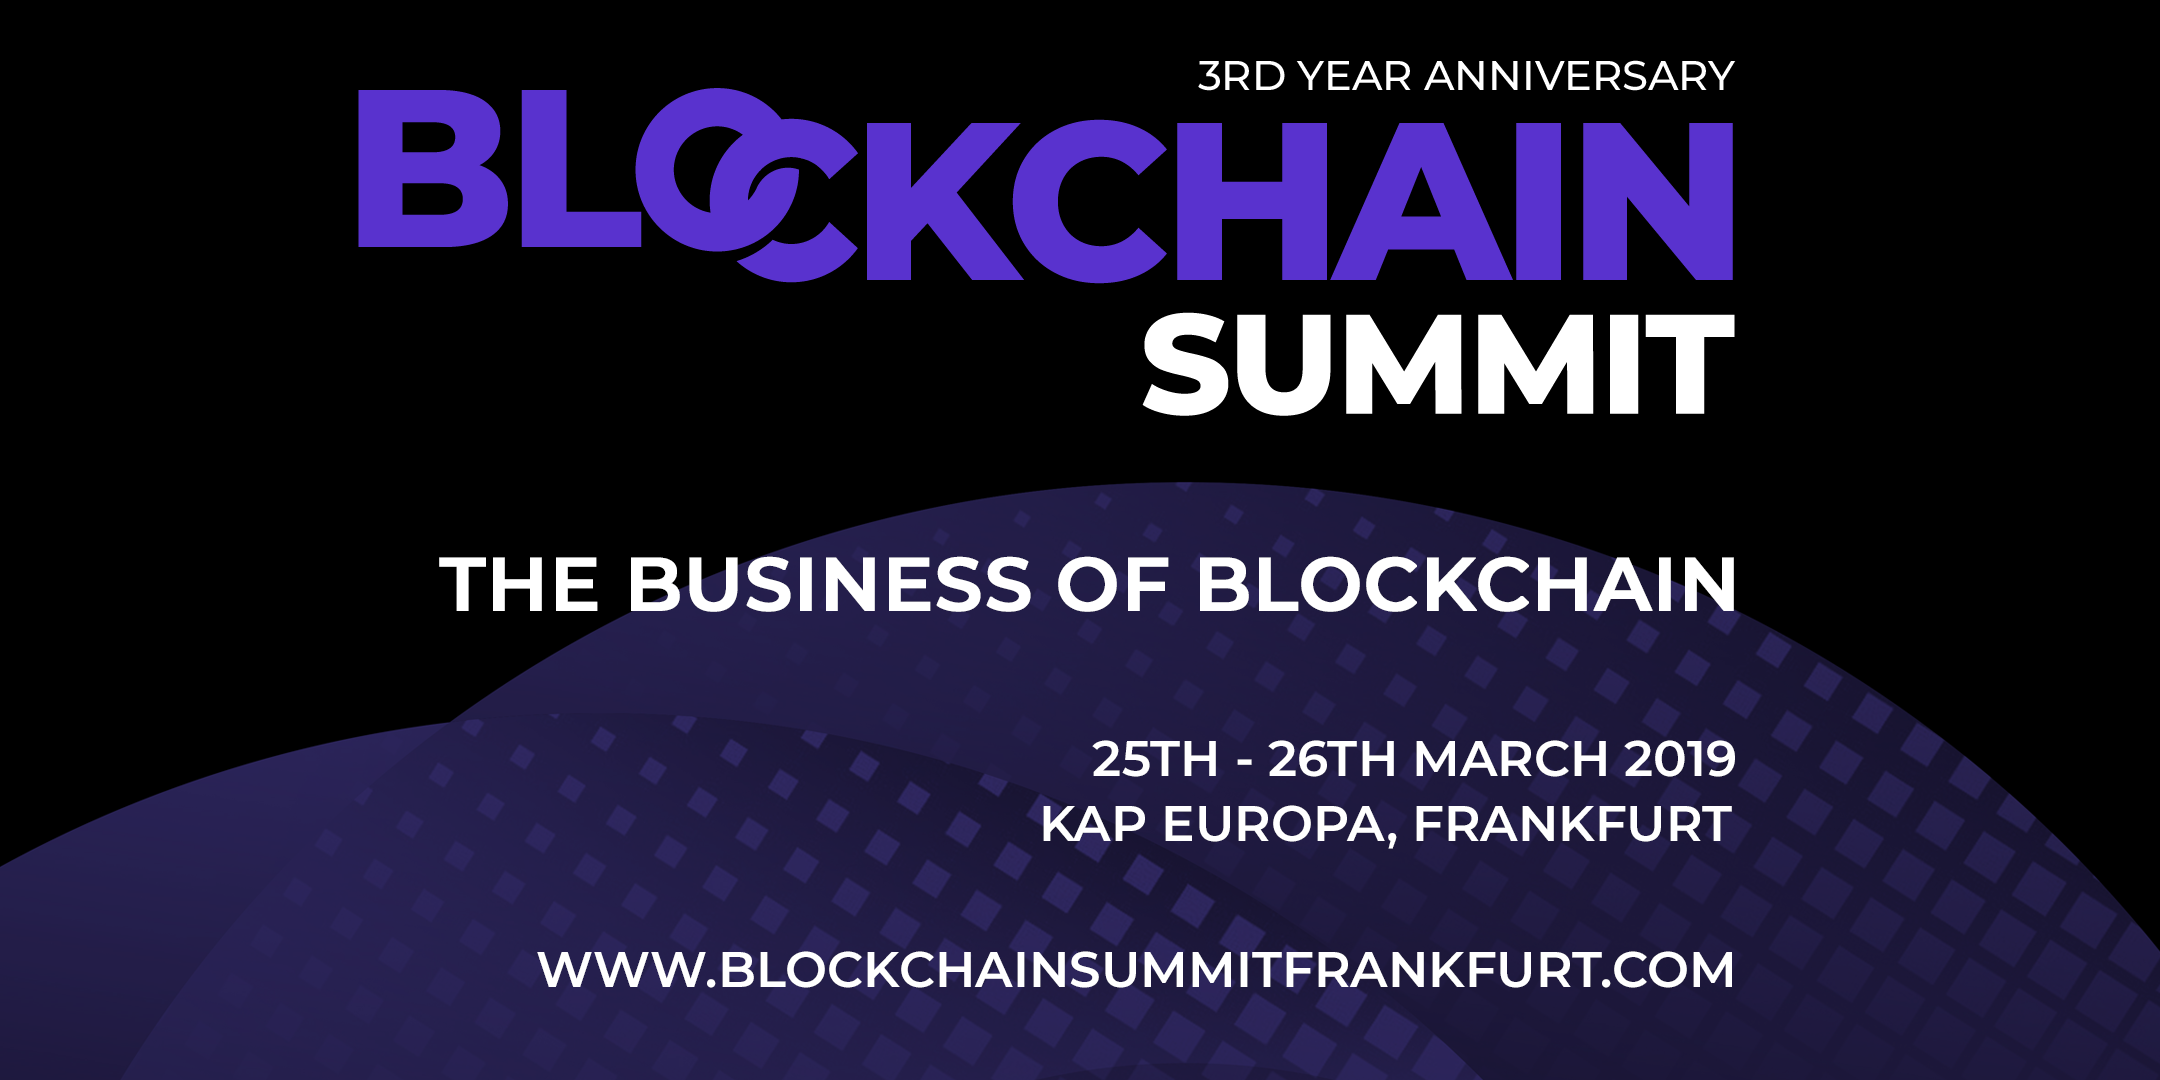 Blockchain Summit Frankfurt organized by Blockchain Summit Series